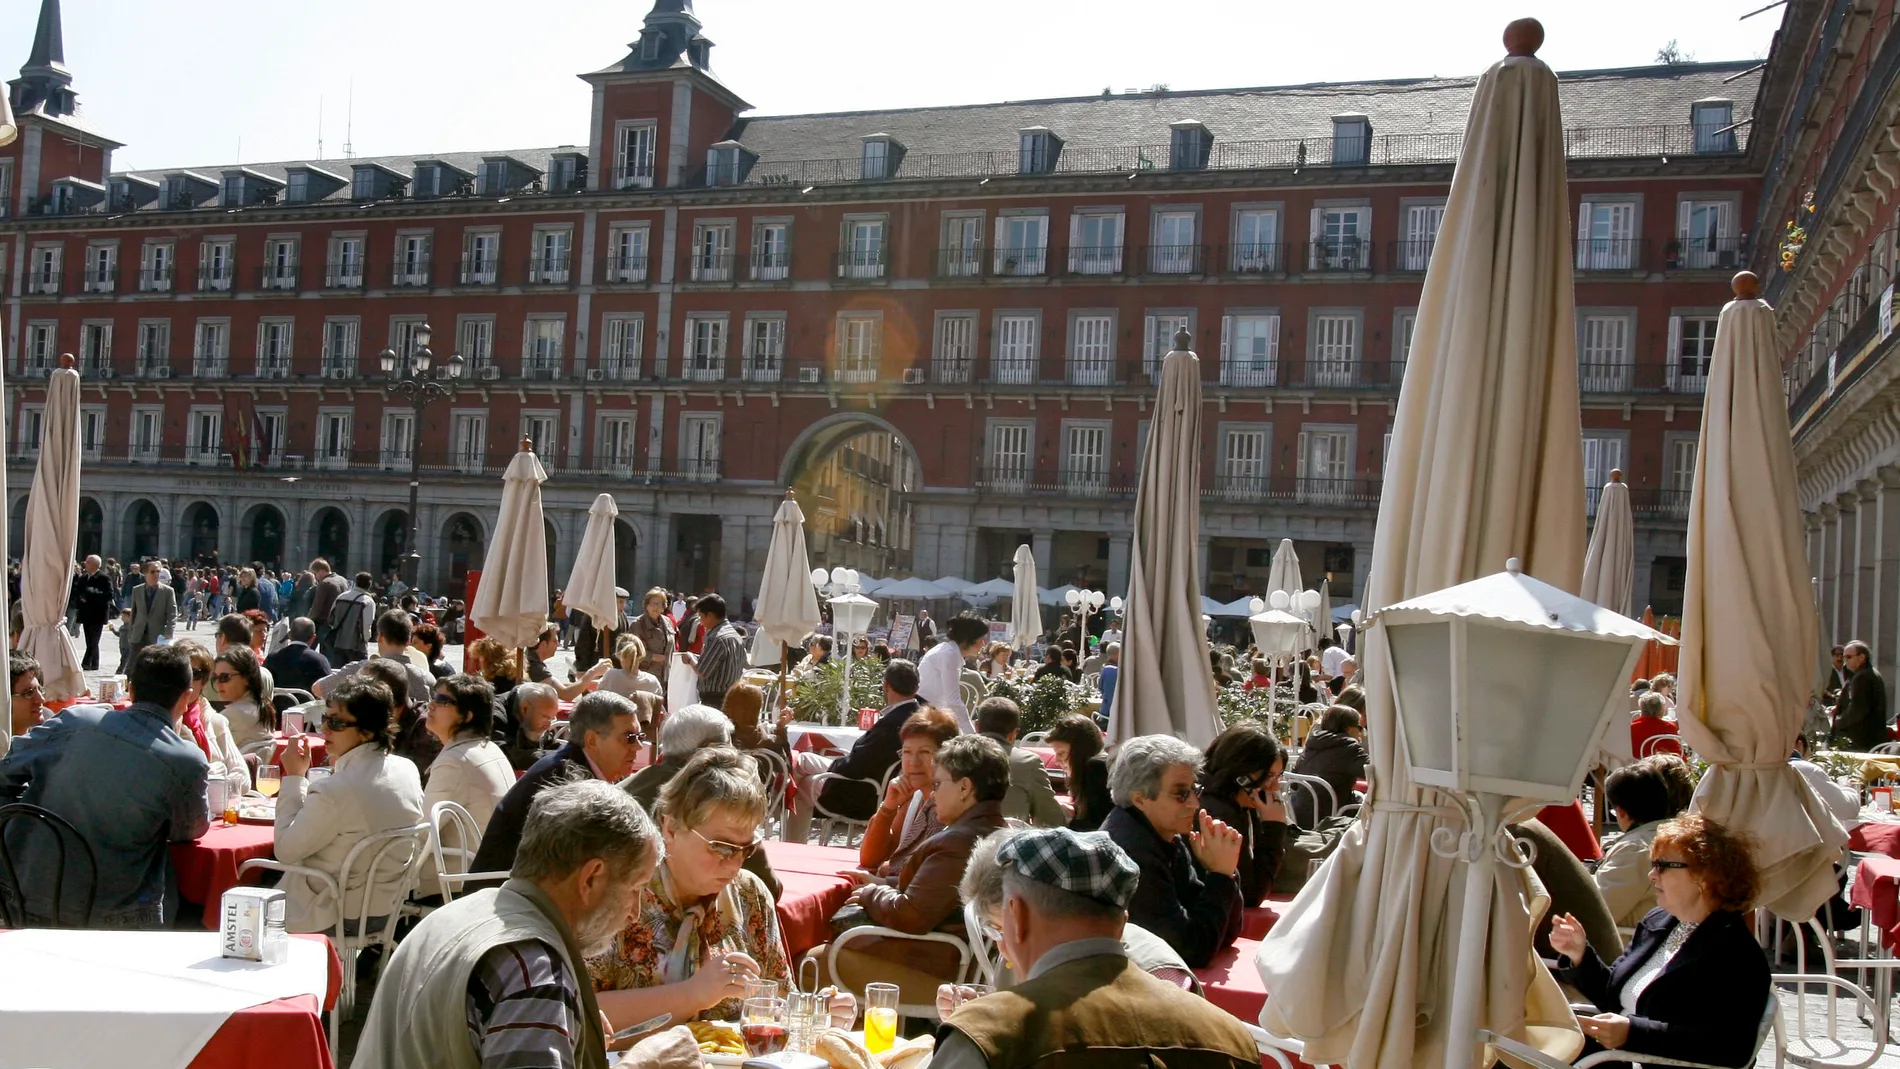 Imagen de la Plaza Mayor de Madrid